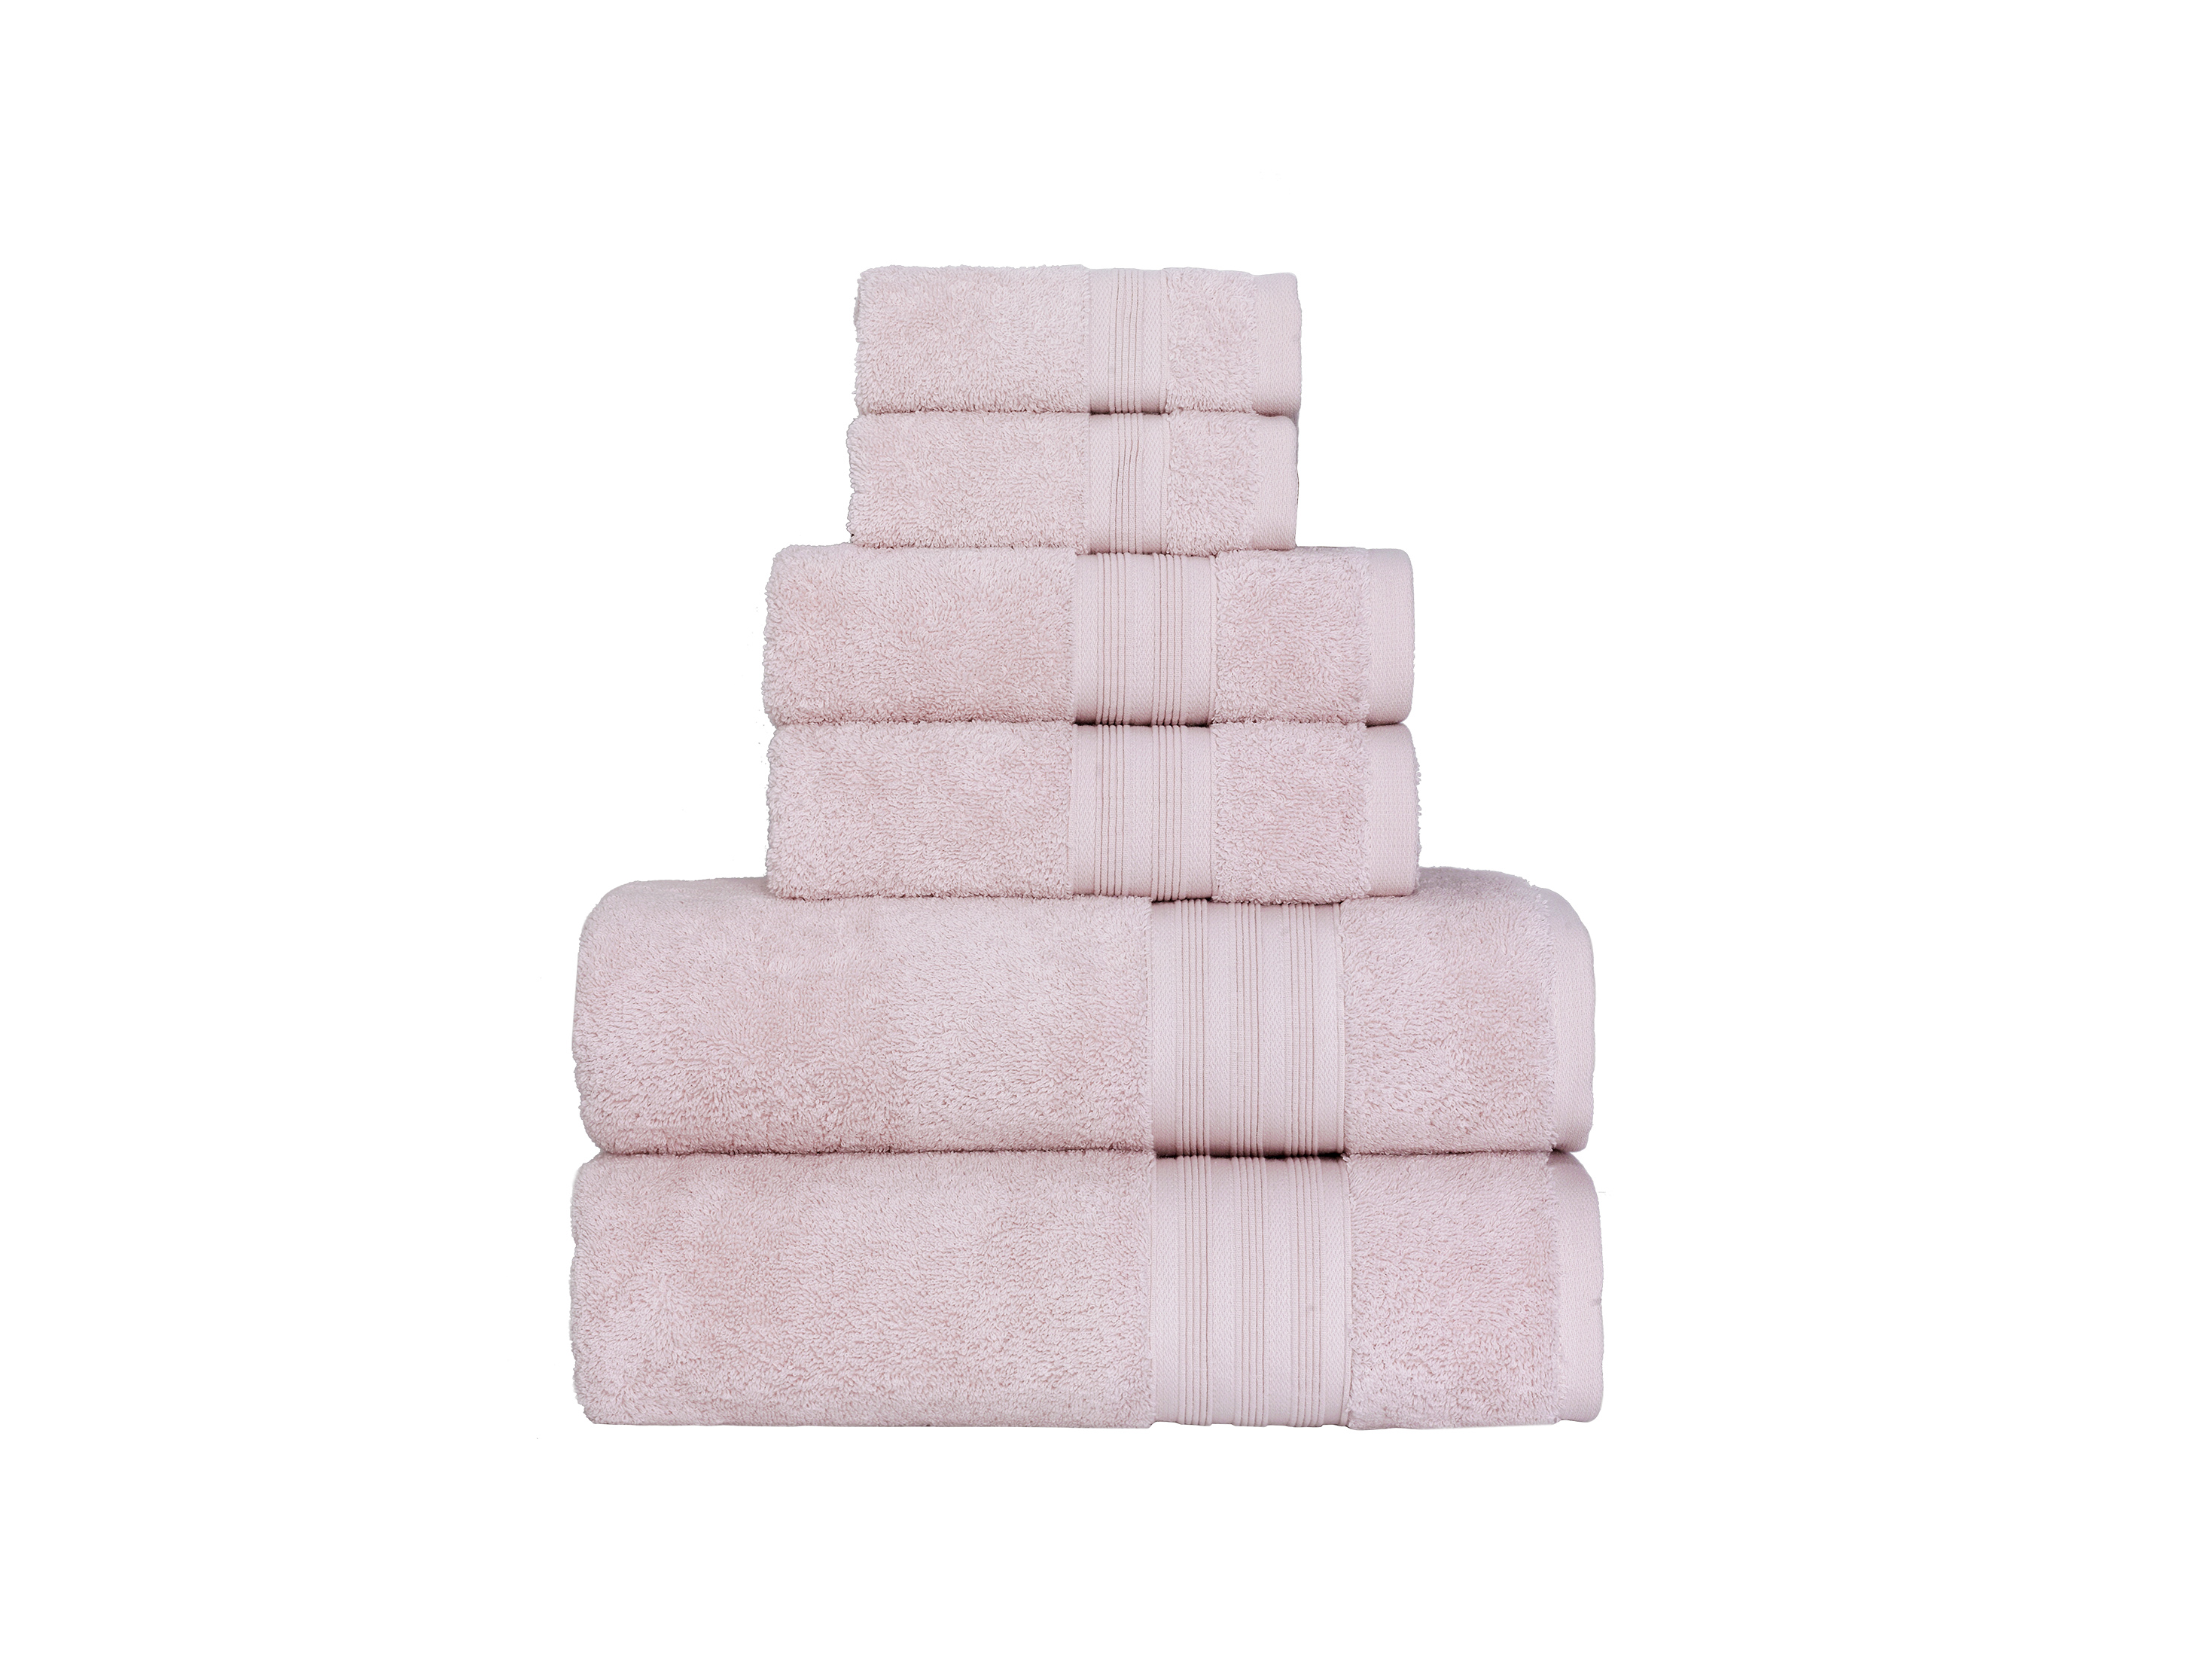 Roka Ibiza 100% Turkish Cotton Bath Towel sets Made in Turkey, sold online at www.Towels.Life